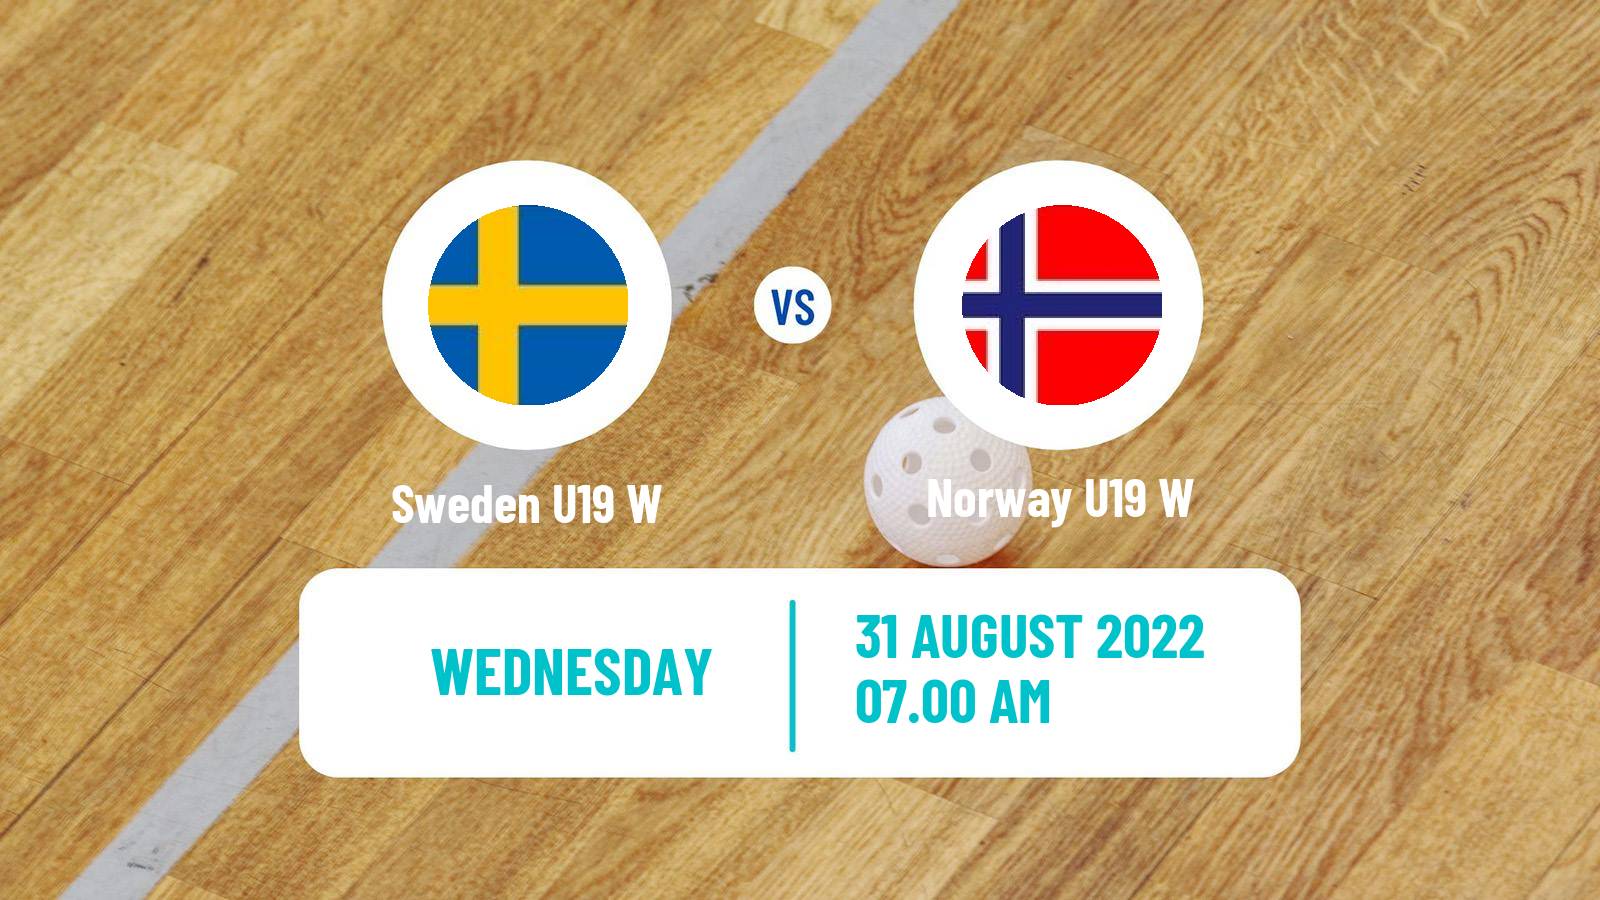 Floorball World Championship Floorball U19 Women Sweden U19 W - Norway U19 W